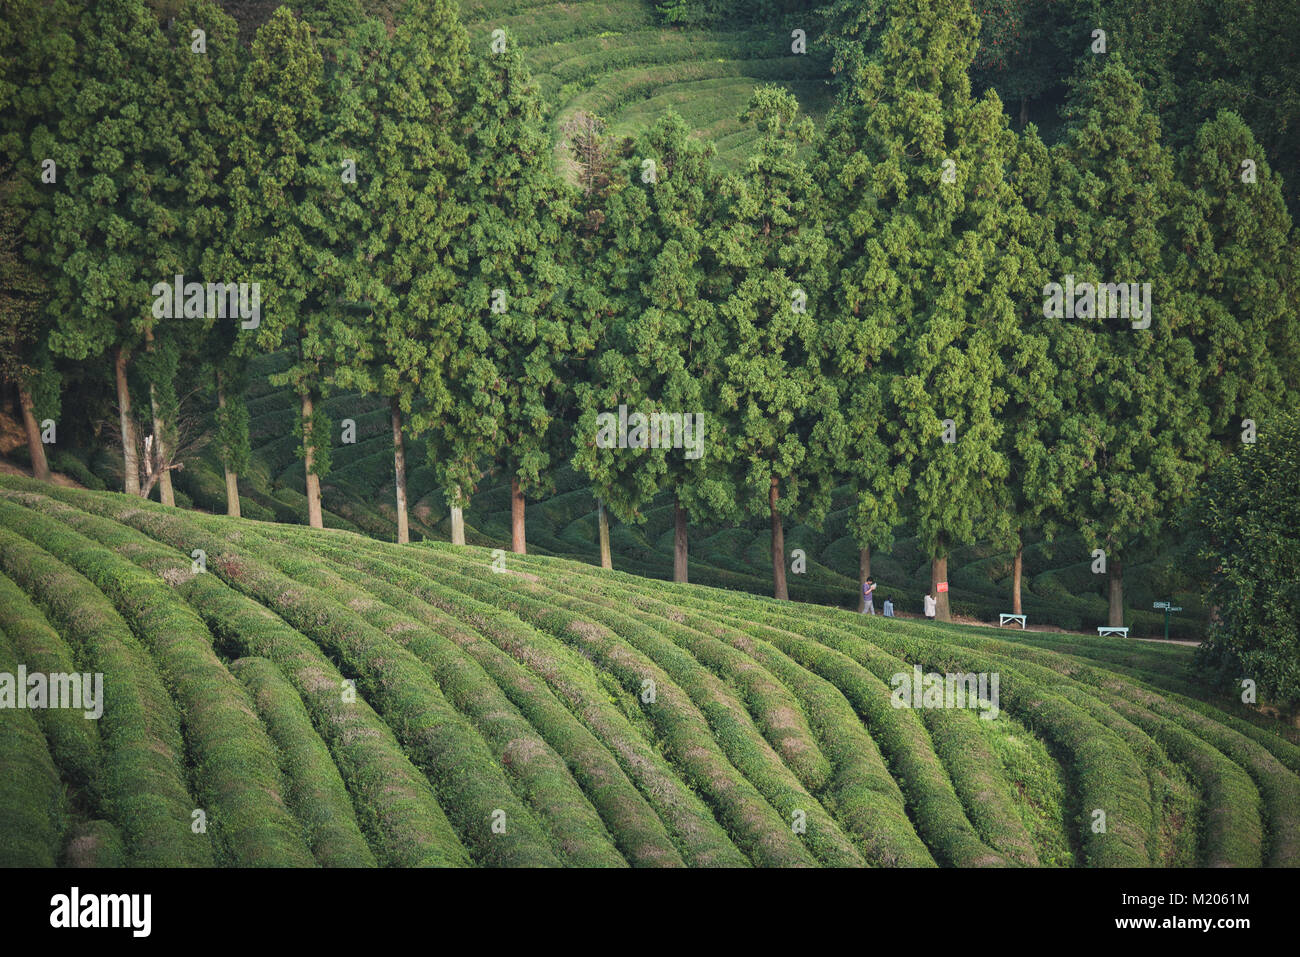 Unter den Pflanzen bei Boseong grüner Tee Tee Plantage, Südkorea Stockfoto